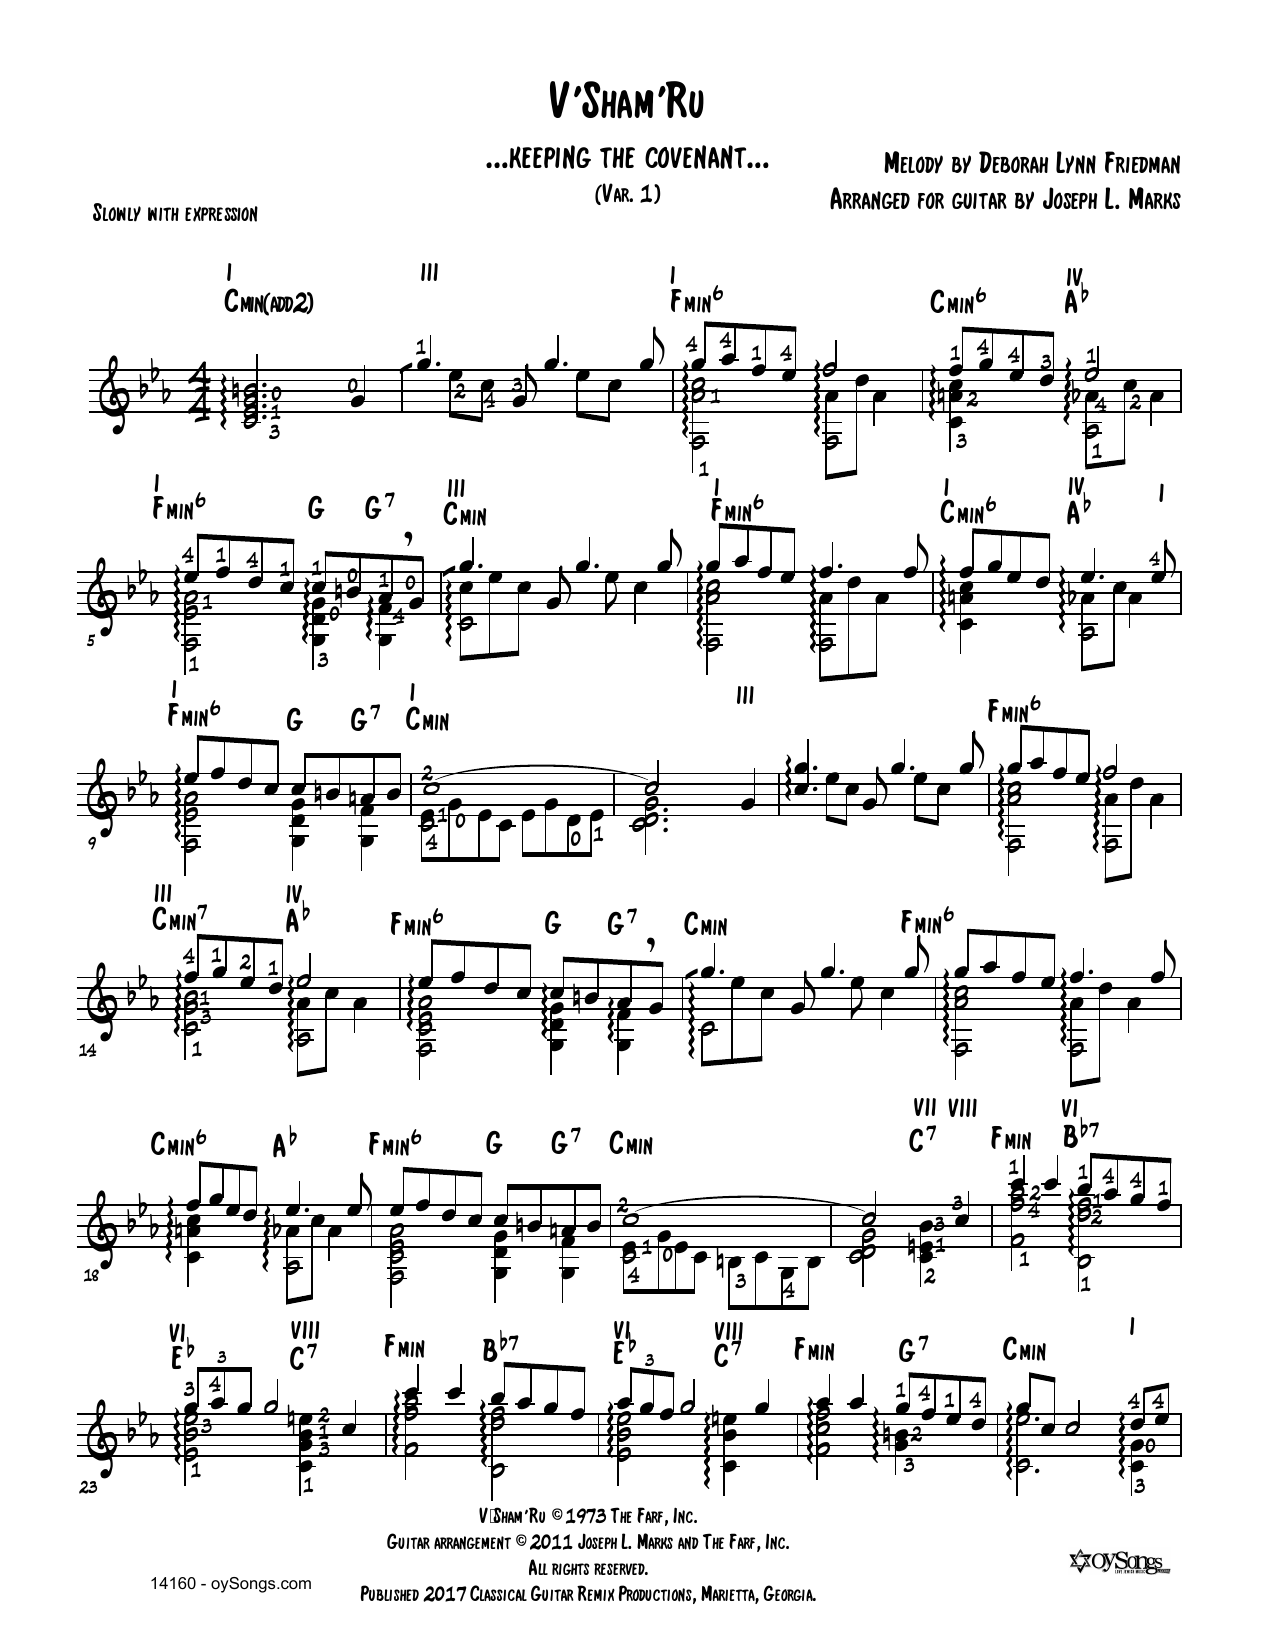 Download Debbie Friedman V'shamru Var 1 (arr. Joe Marks) Sheet Music and learn how to play Solo Guitar PDF digital score in minutes